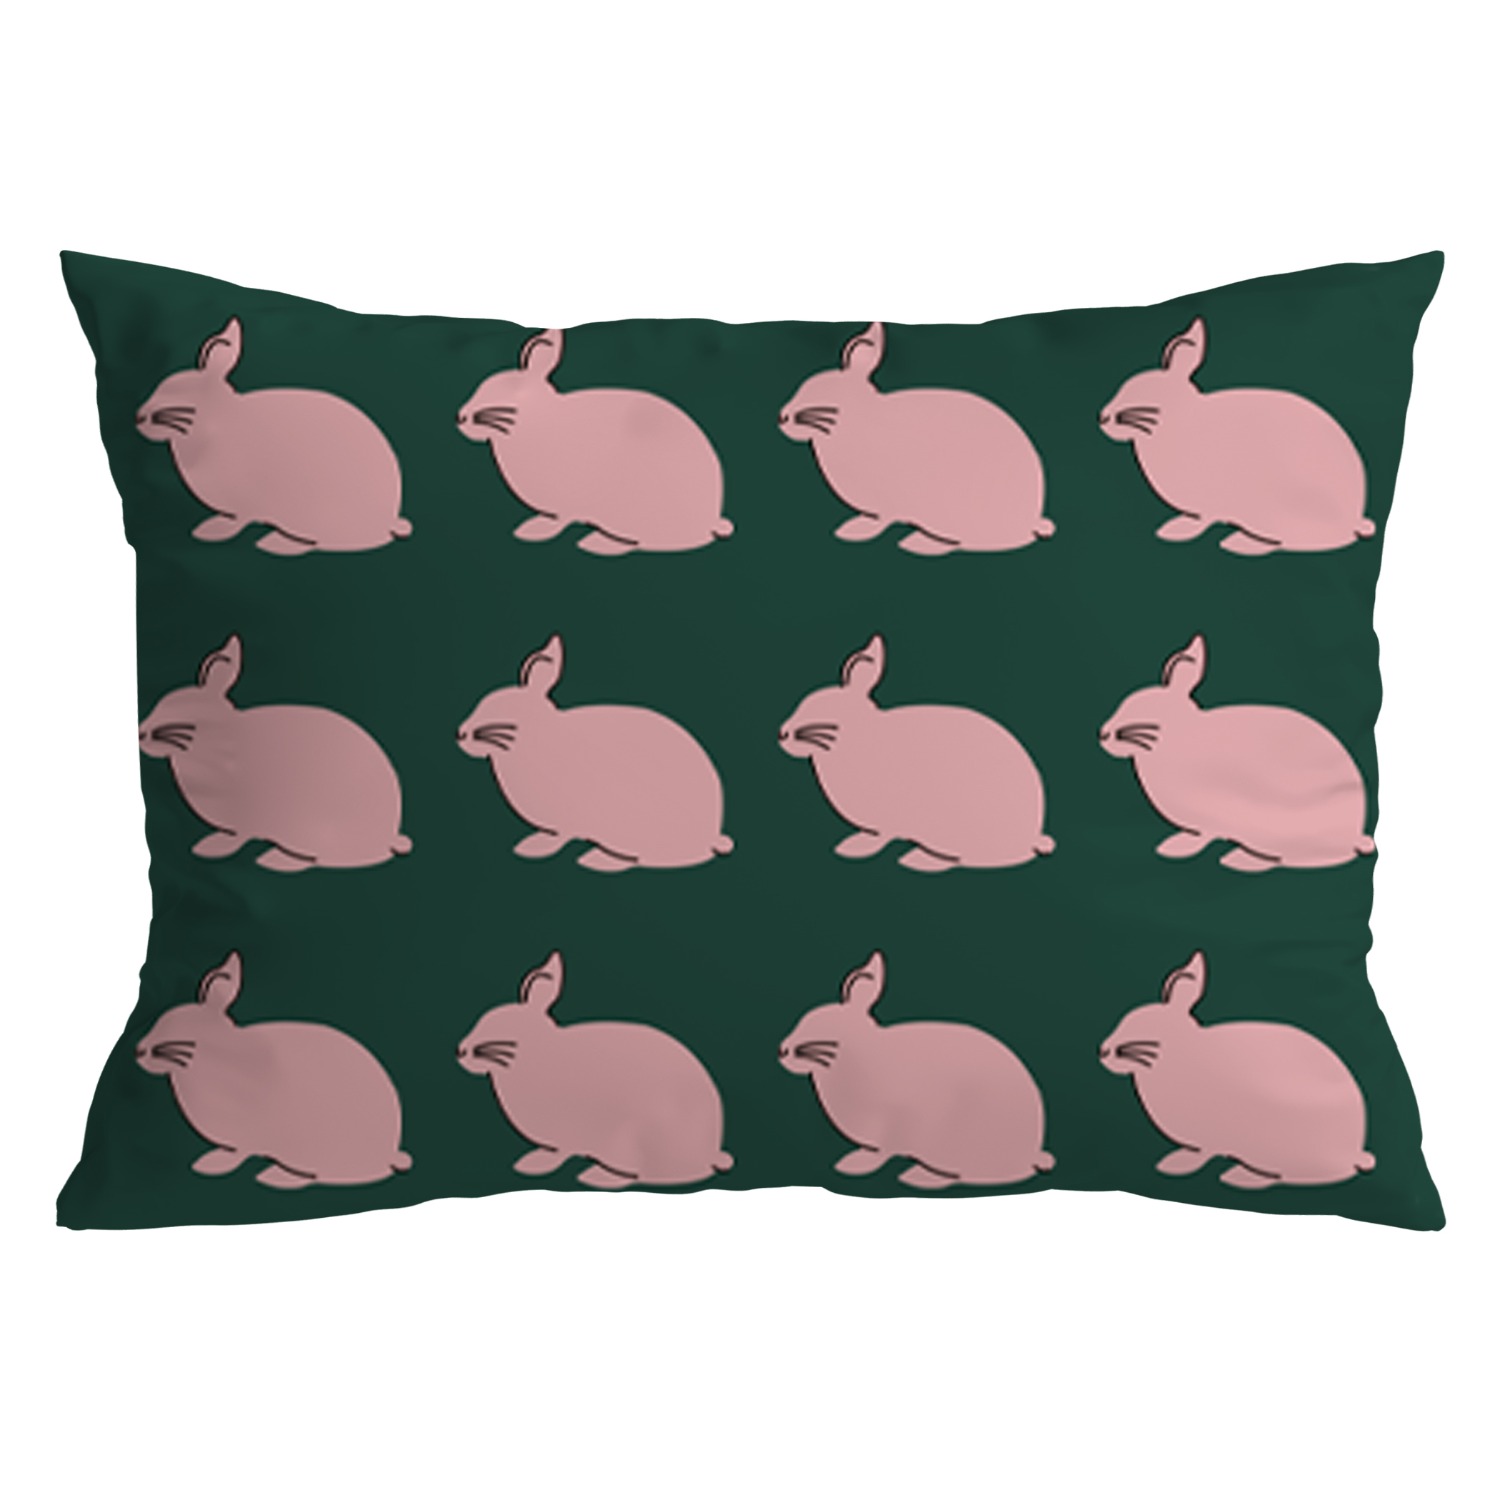 [a.o.b] Rabbit pillow cover